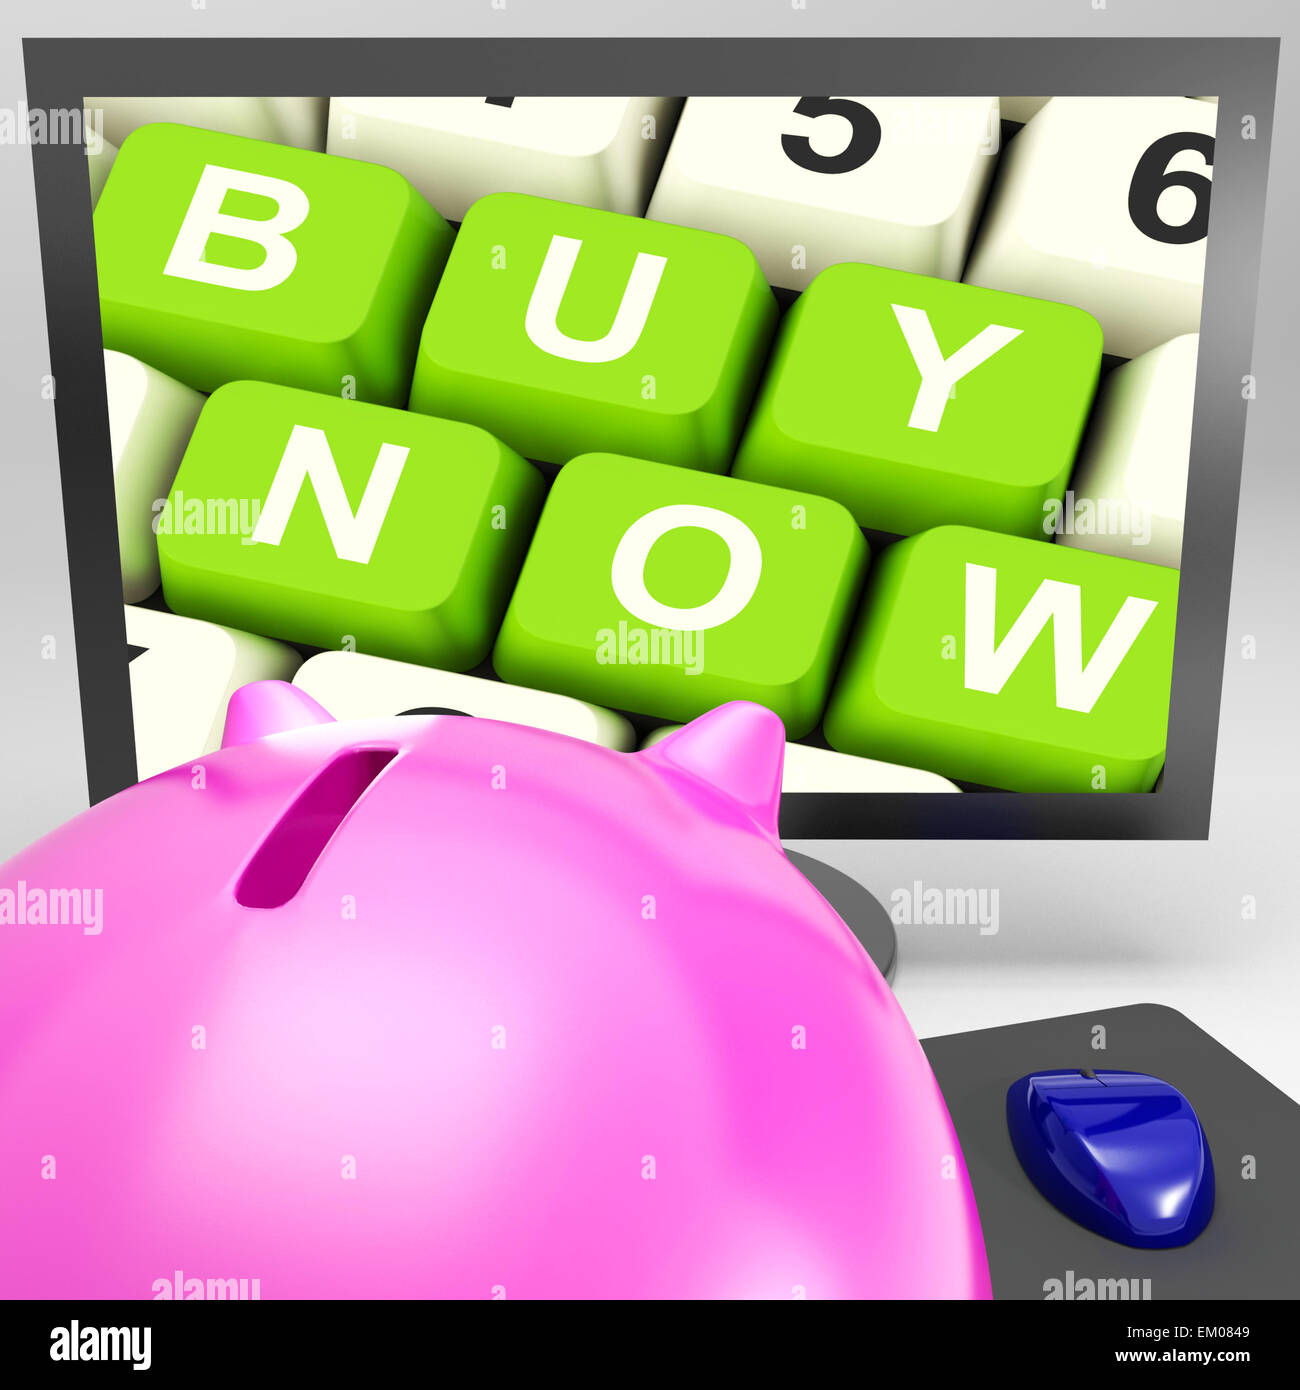 Buy Now Keys On Monitor Showing Ecommerce Stock Photo